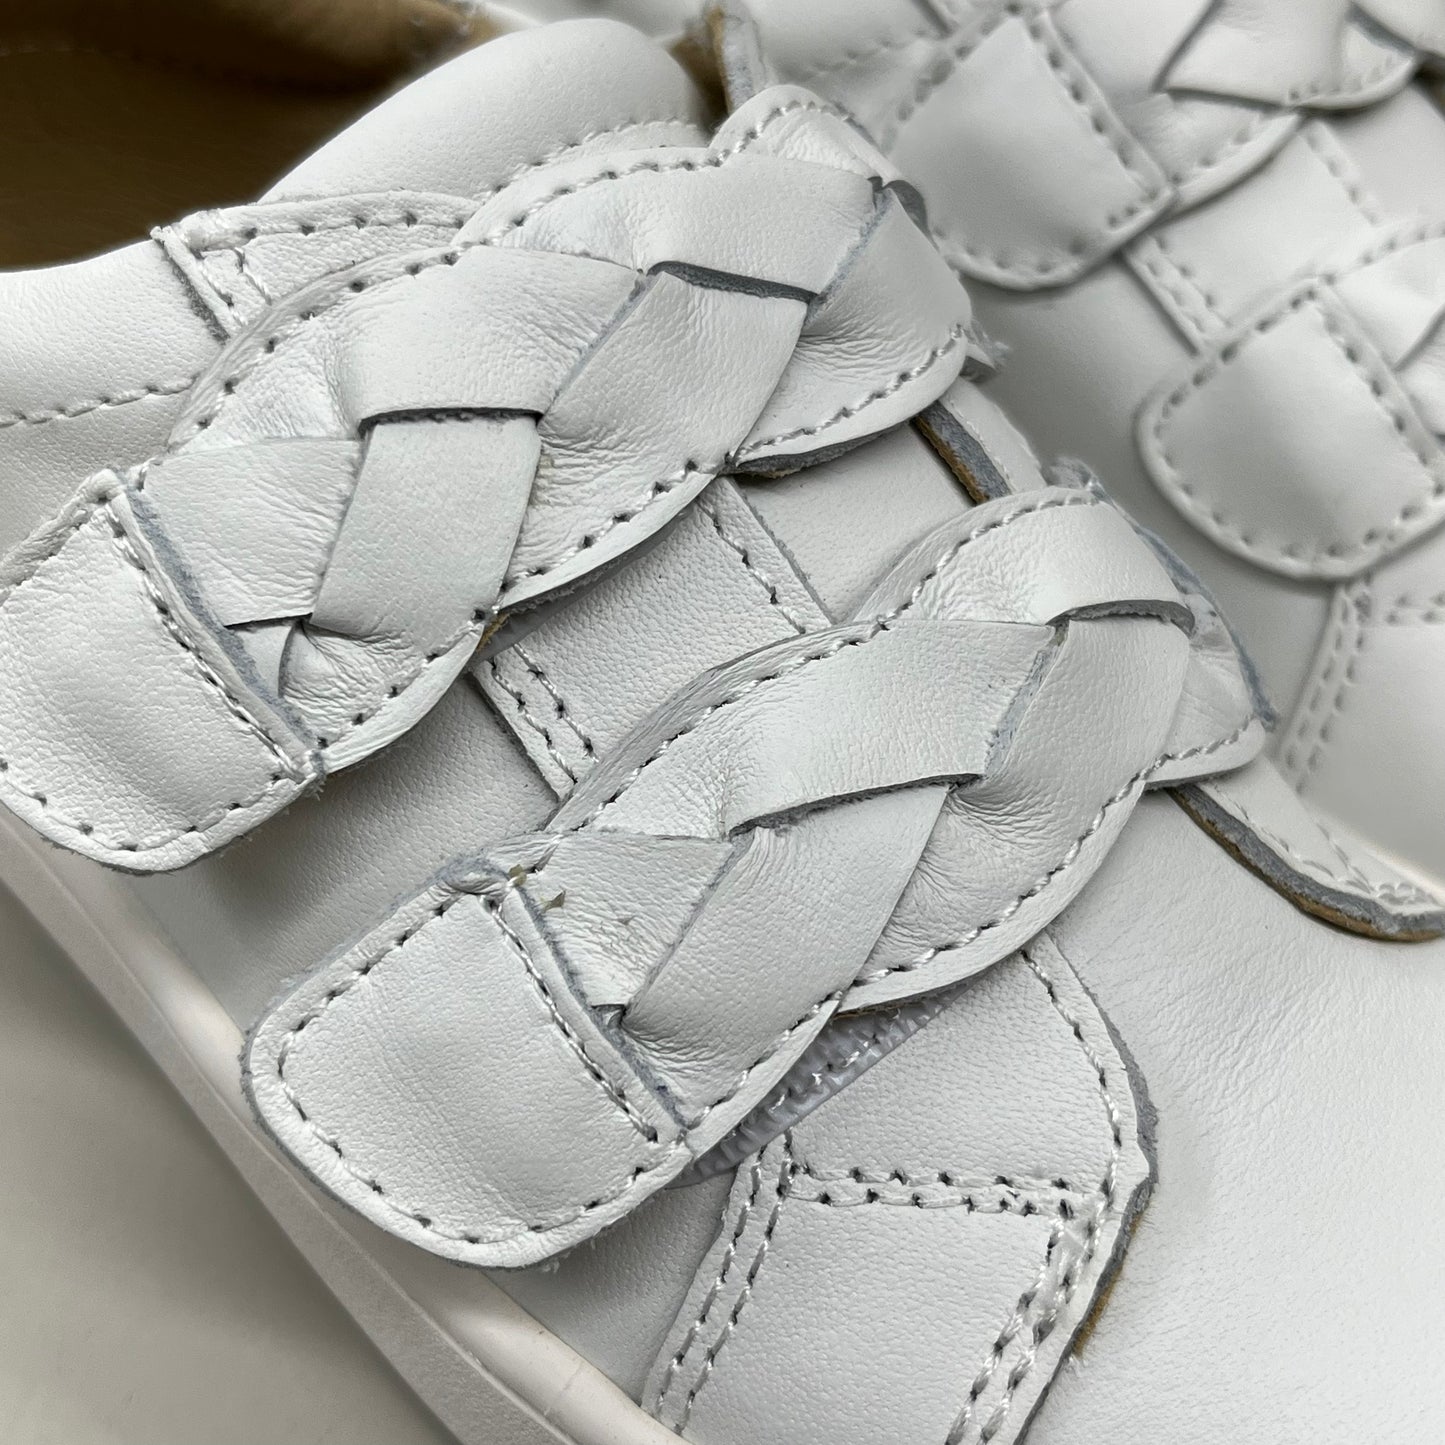 OLD SOLES Baby Plats Leather Shoe Sz 9 EU 25 Snow / Silver #6134